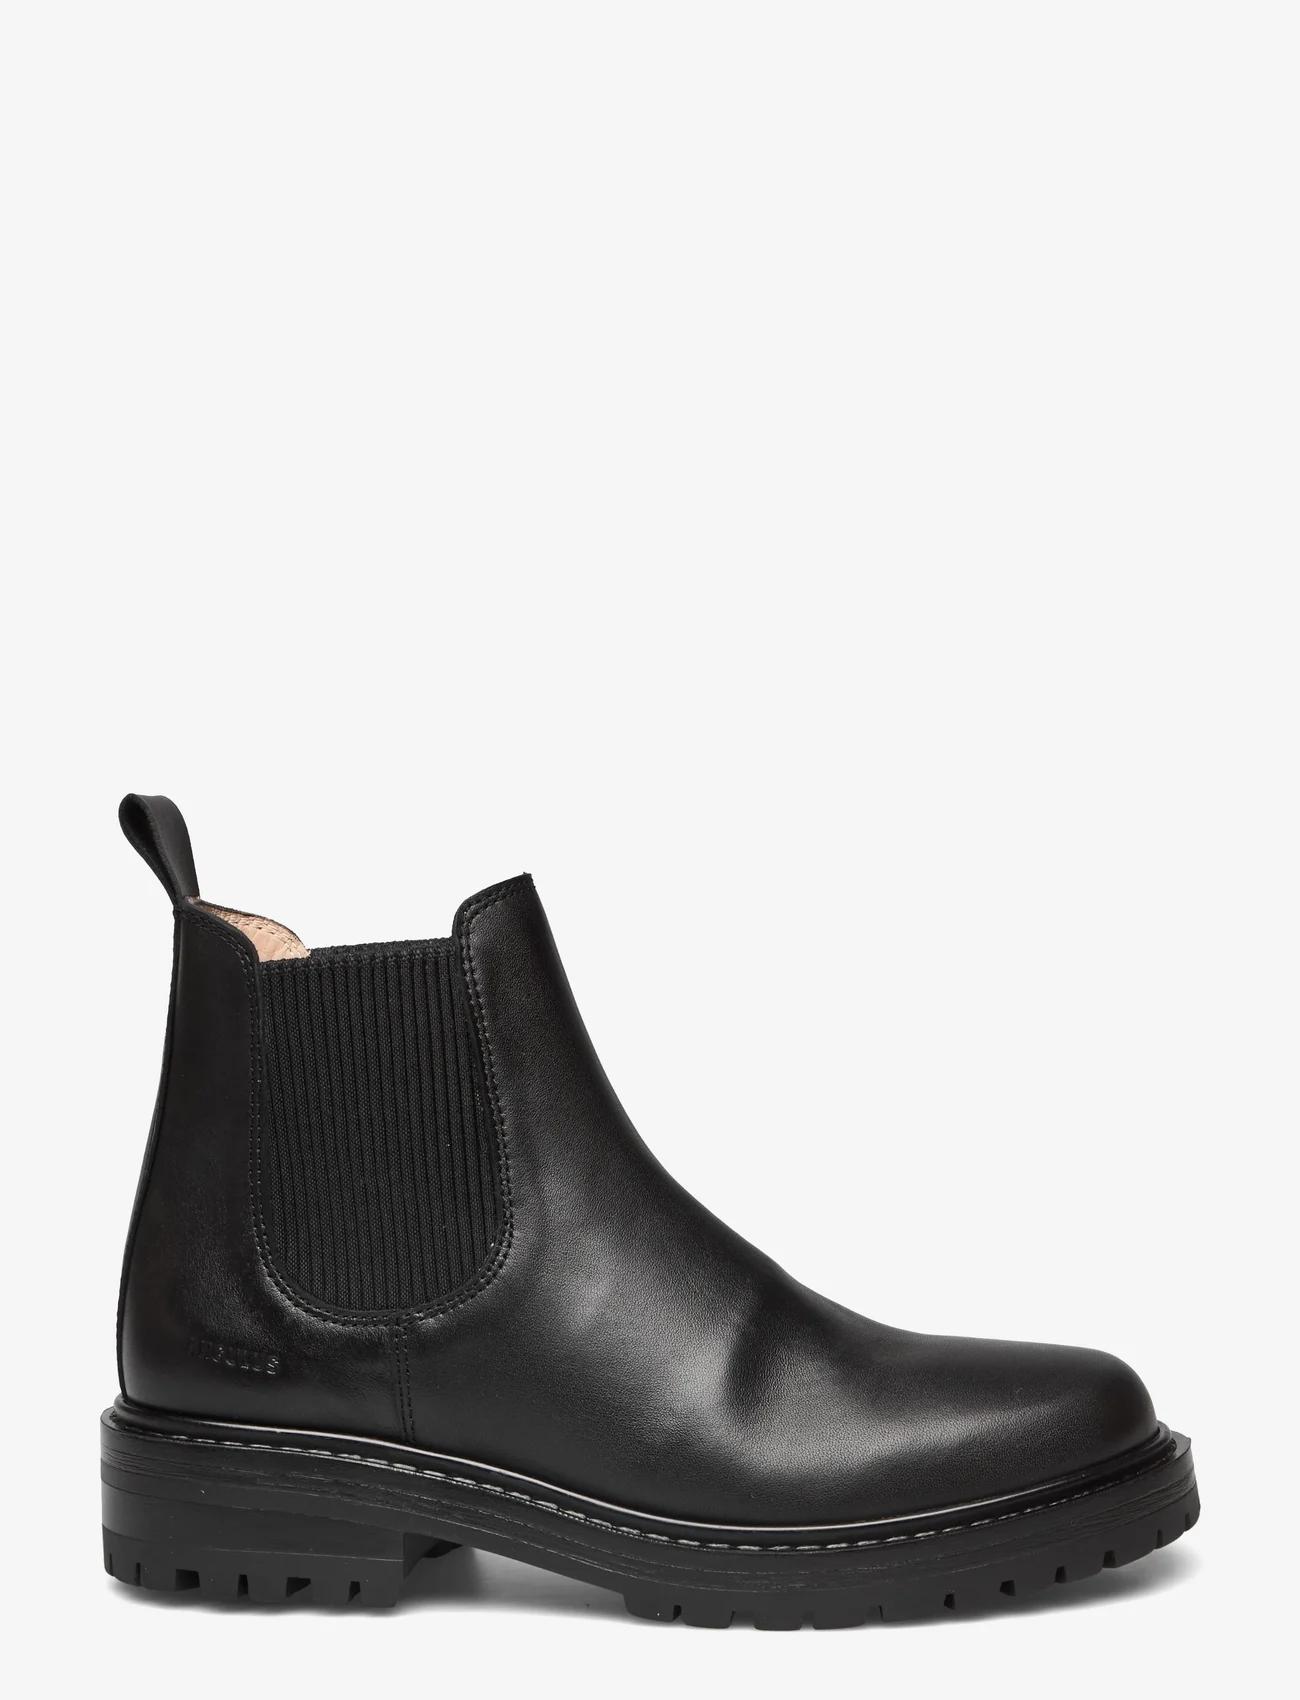 ANGULUS - Booties - flat - chelsea boots - 1604/019 black/black - 1